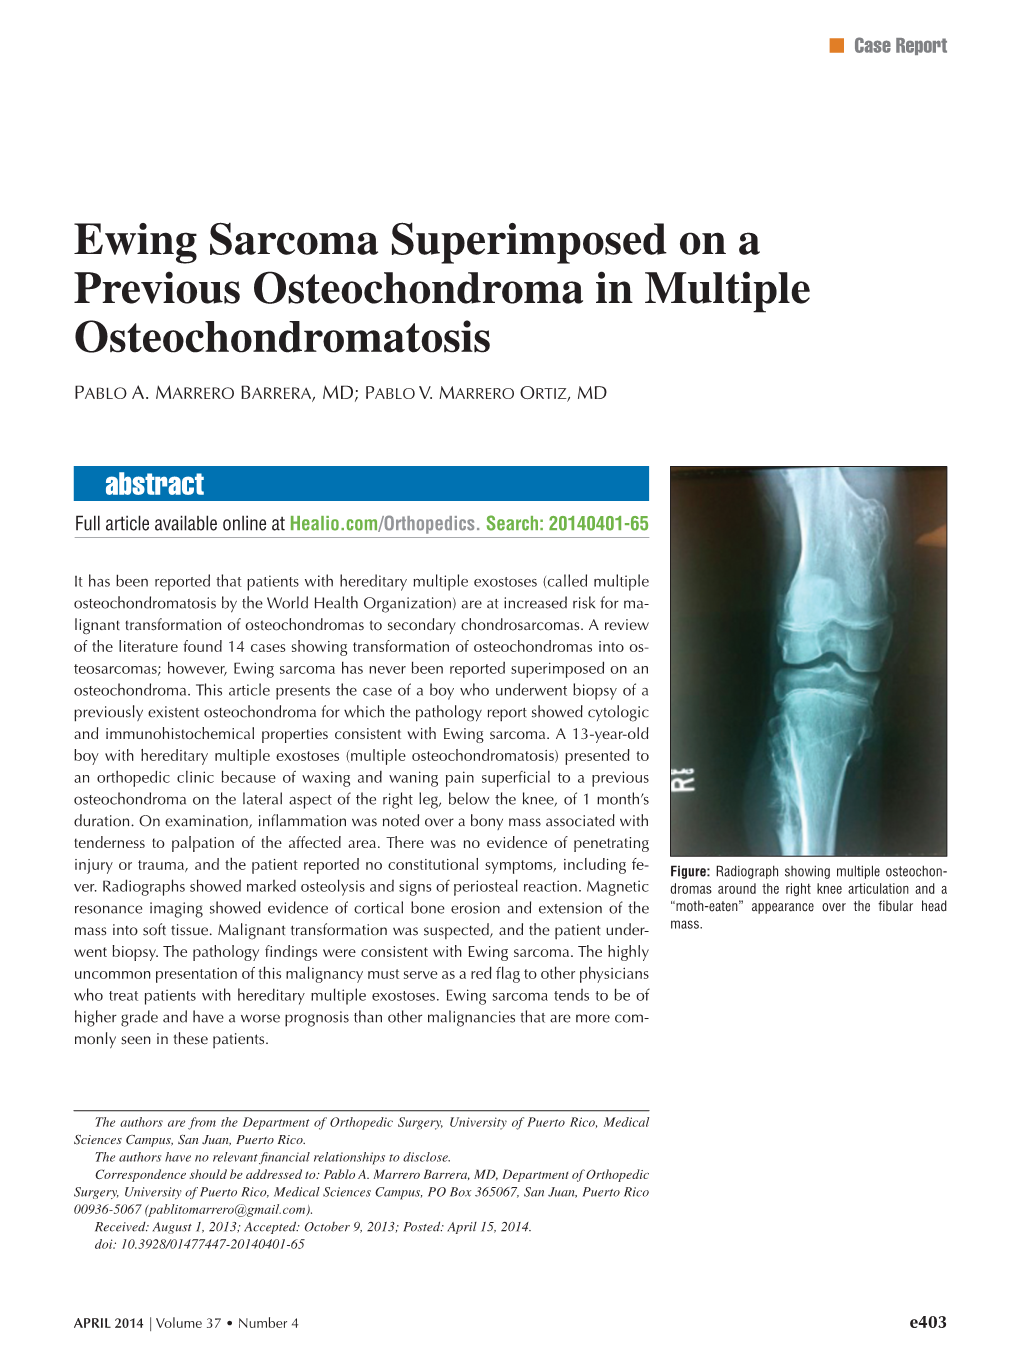 Ewing Sarcoma Superimposed on a Previous Osteochondroma in Multiple Osteochondromatosis